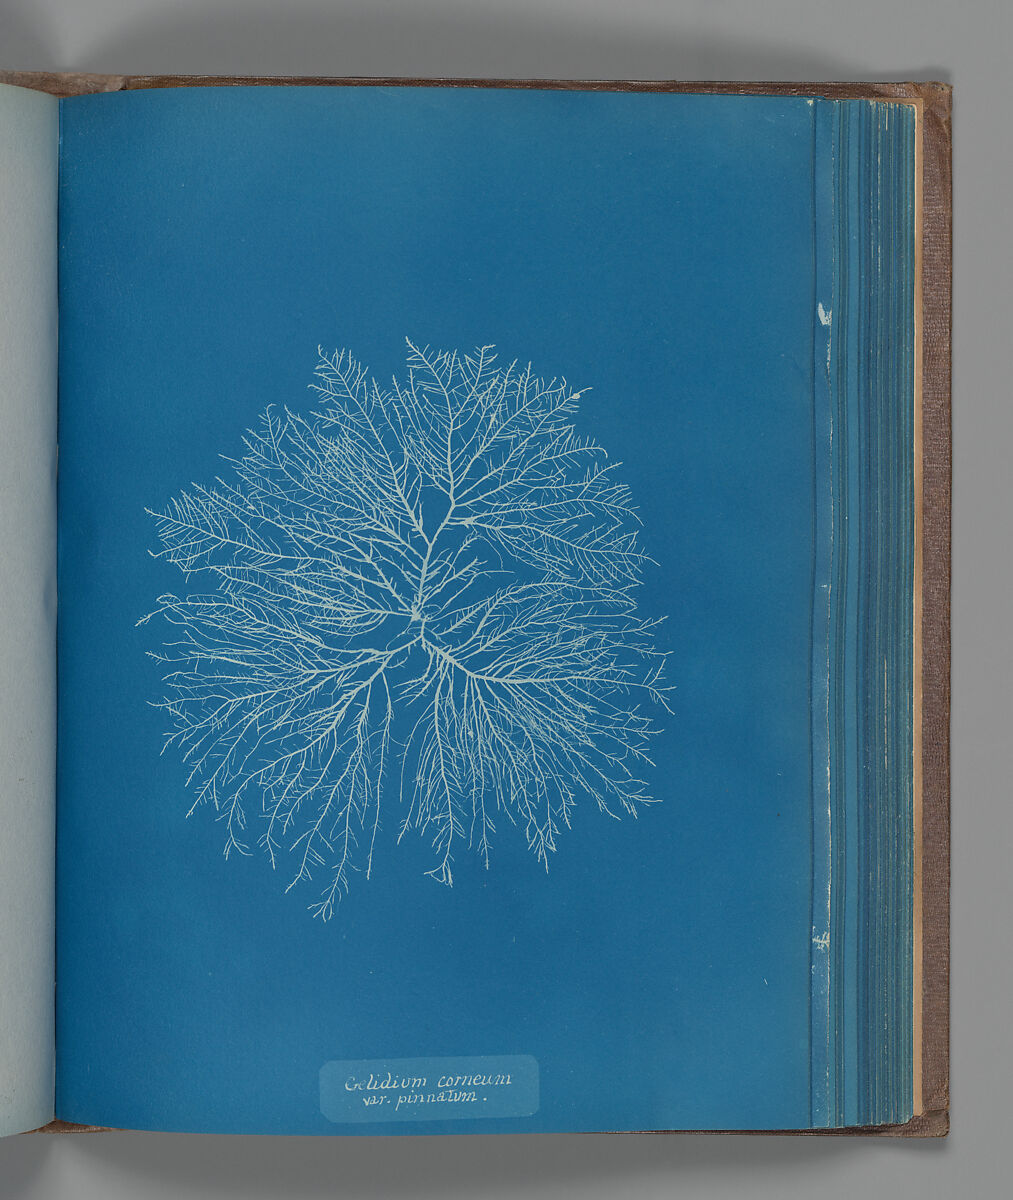 Gelidium corneum, var. pinnatum, Anna Atkins (British, 1799–1871), Cyanotype 